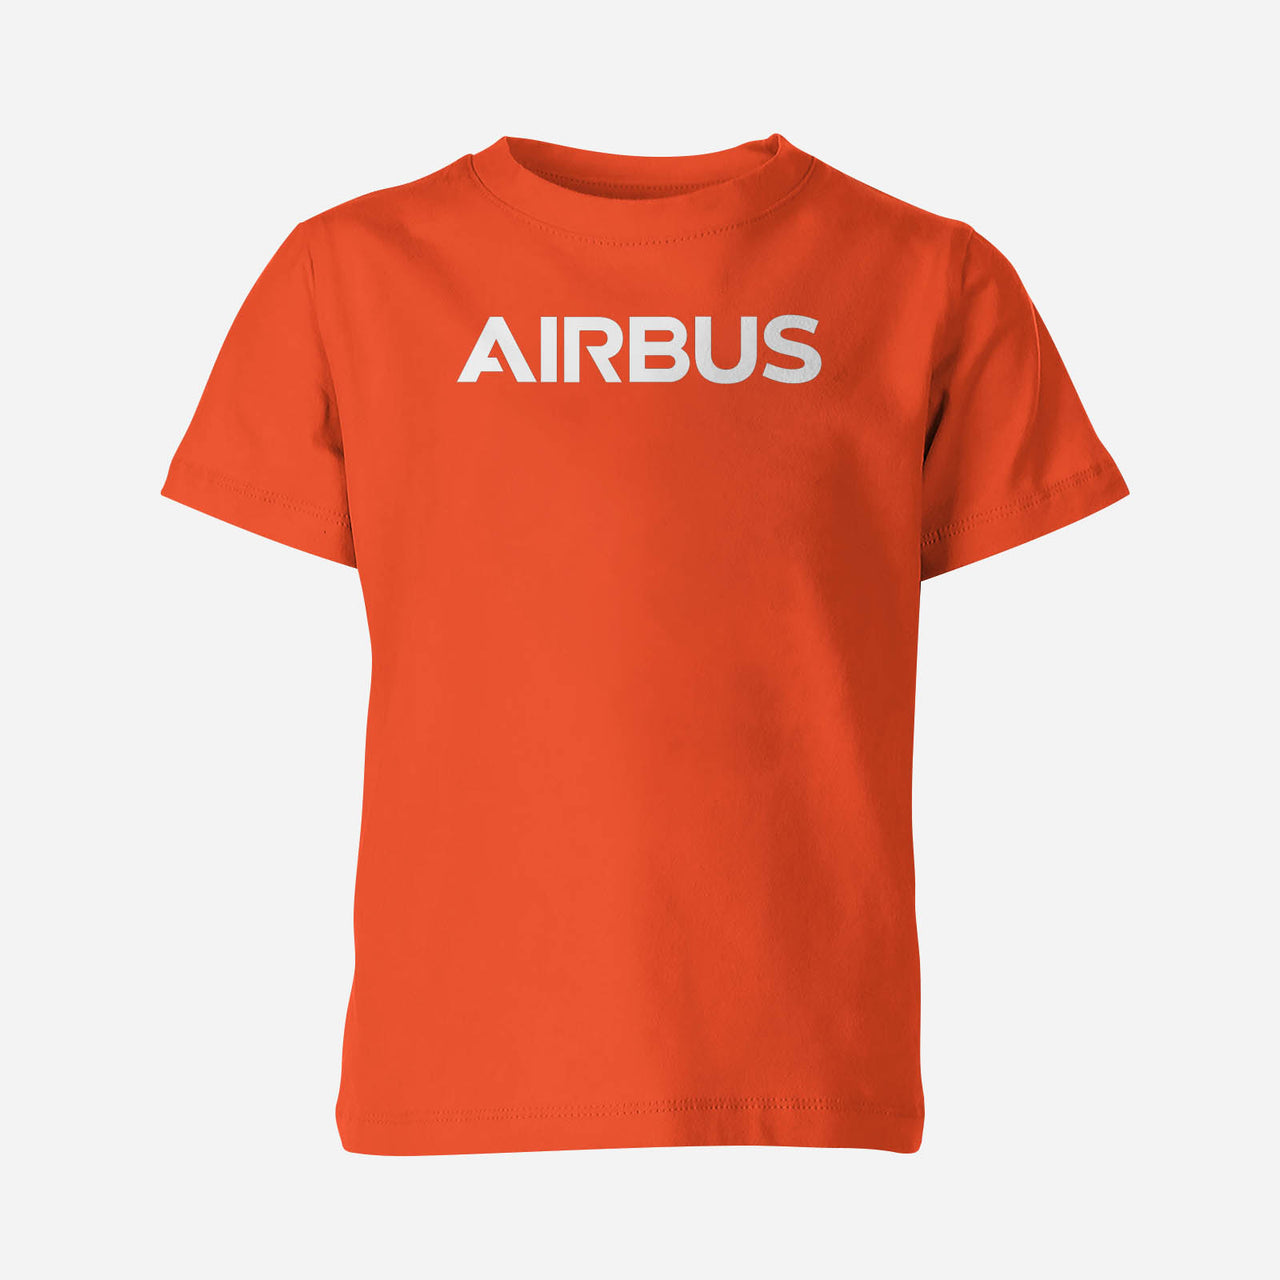 Airbus & Text Designed Children T-Shirts